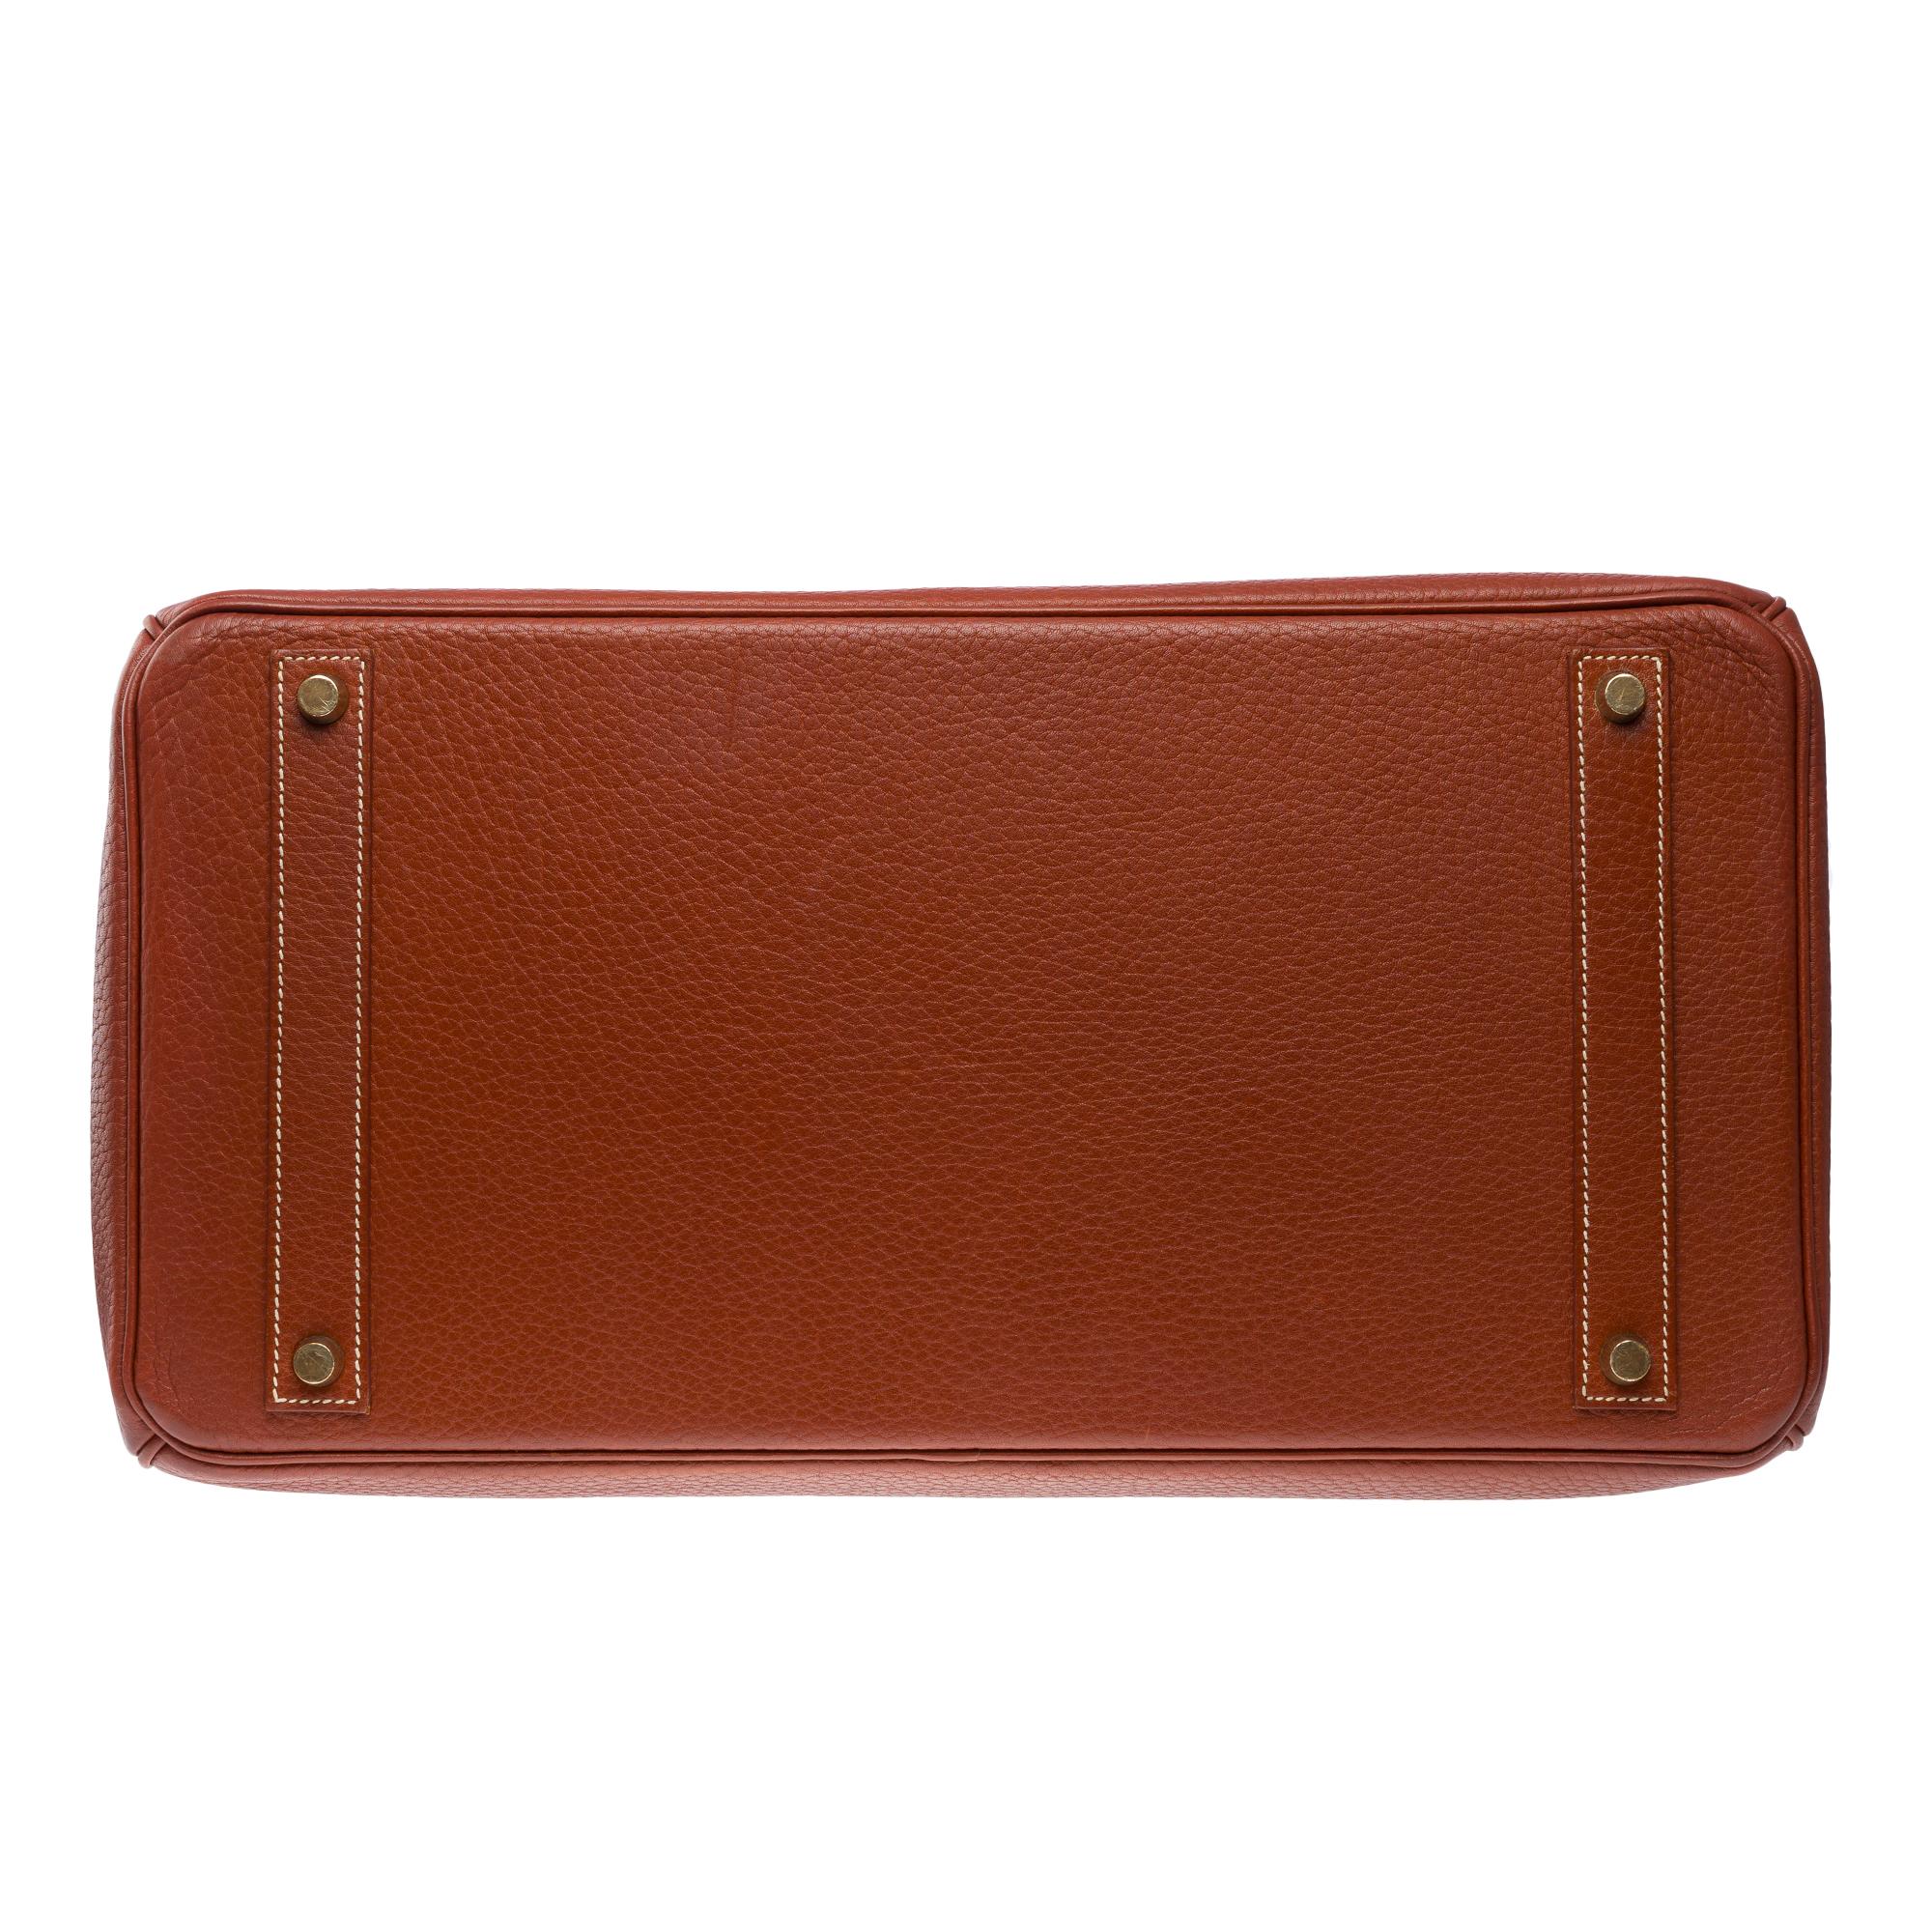 Classy & Rare Hermes Birkin 40 handbag in Brick Fjord leather, GHW 7